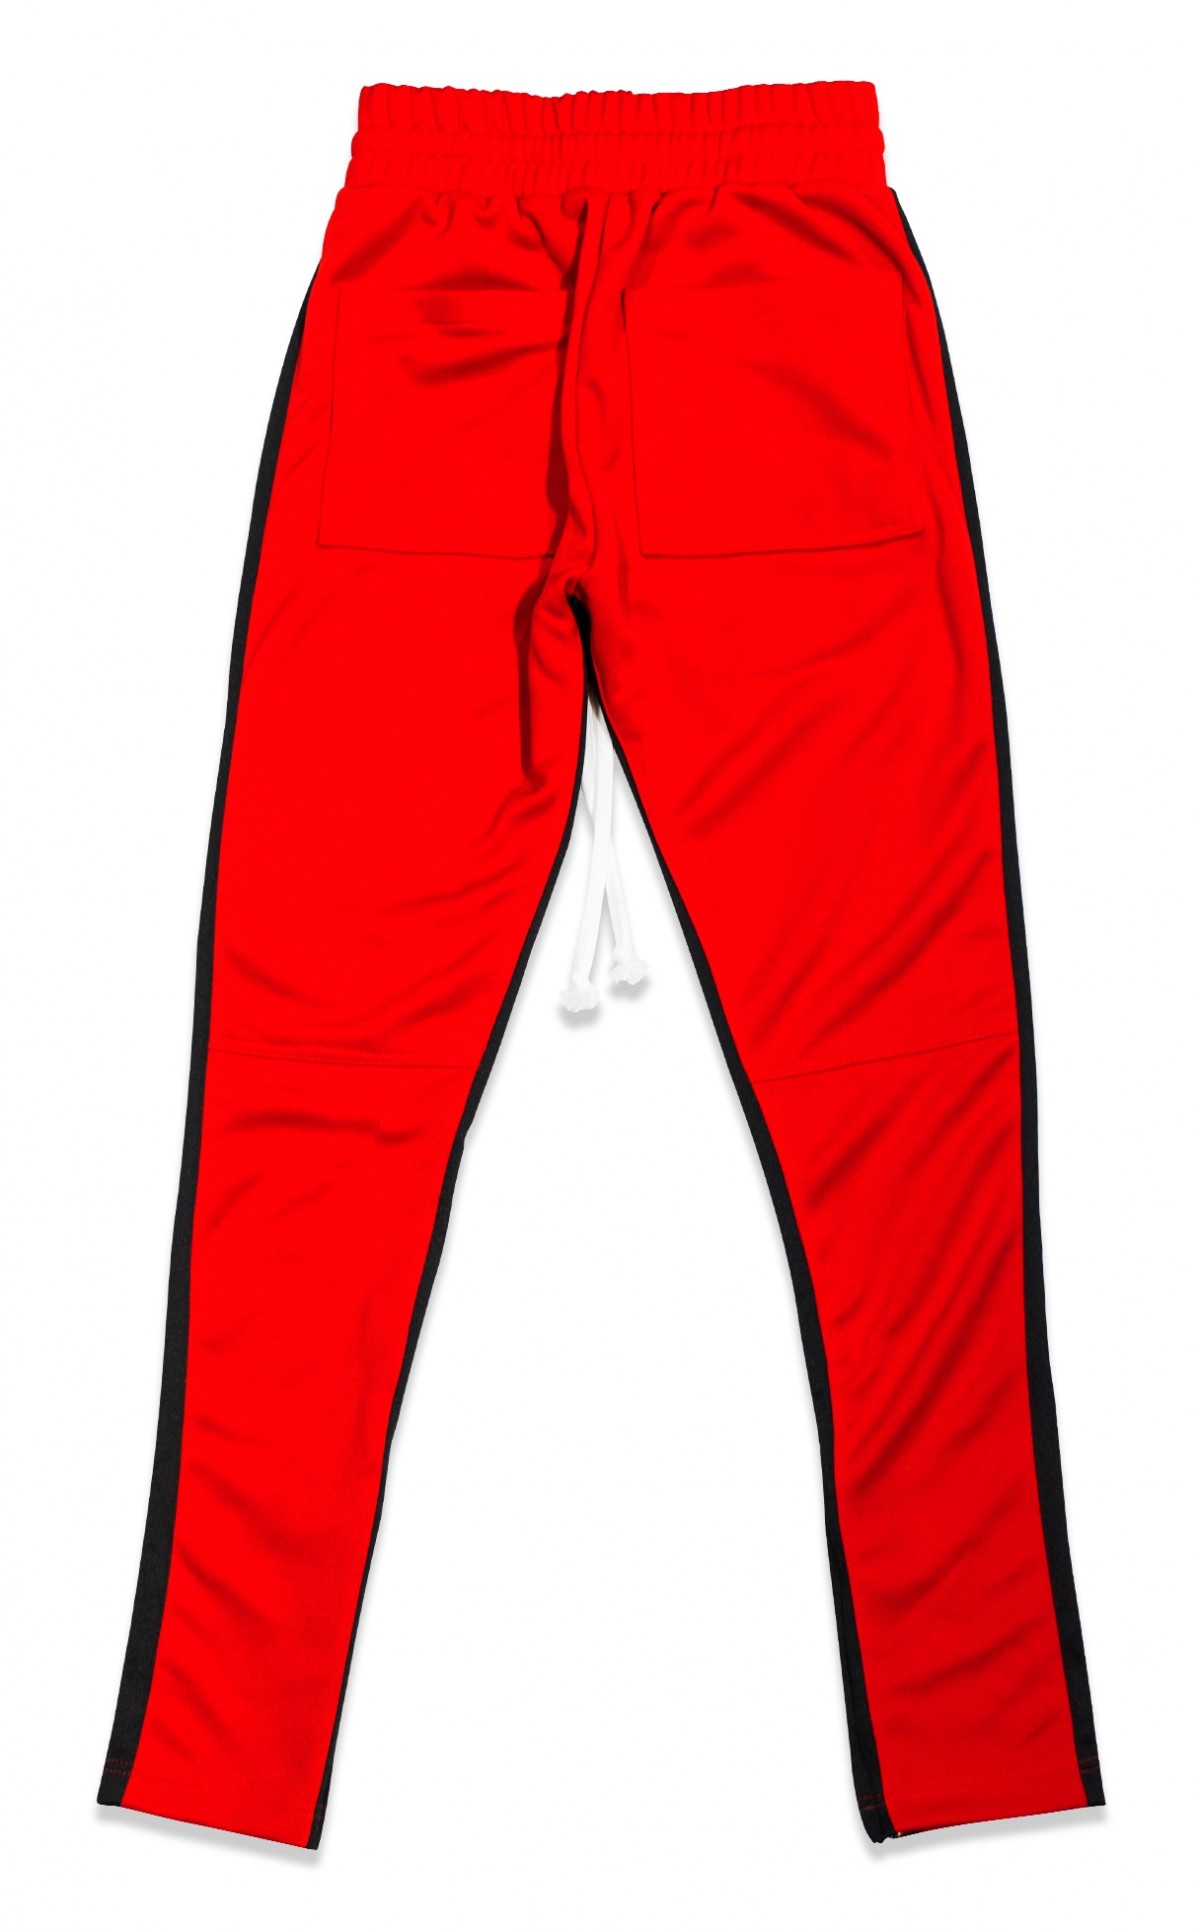 TZ TRACK PANTS (RED/BLACK)